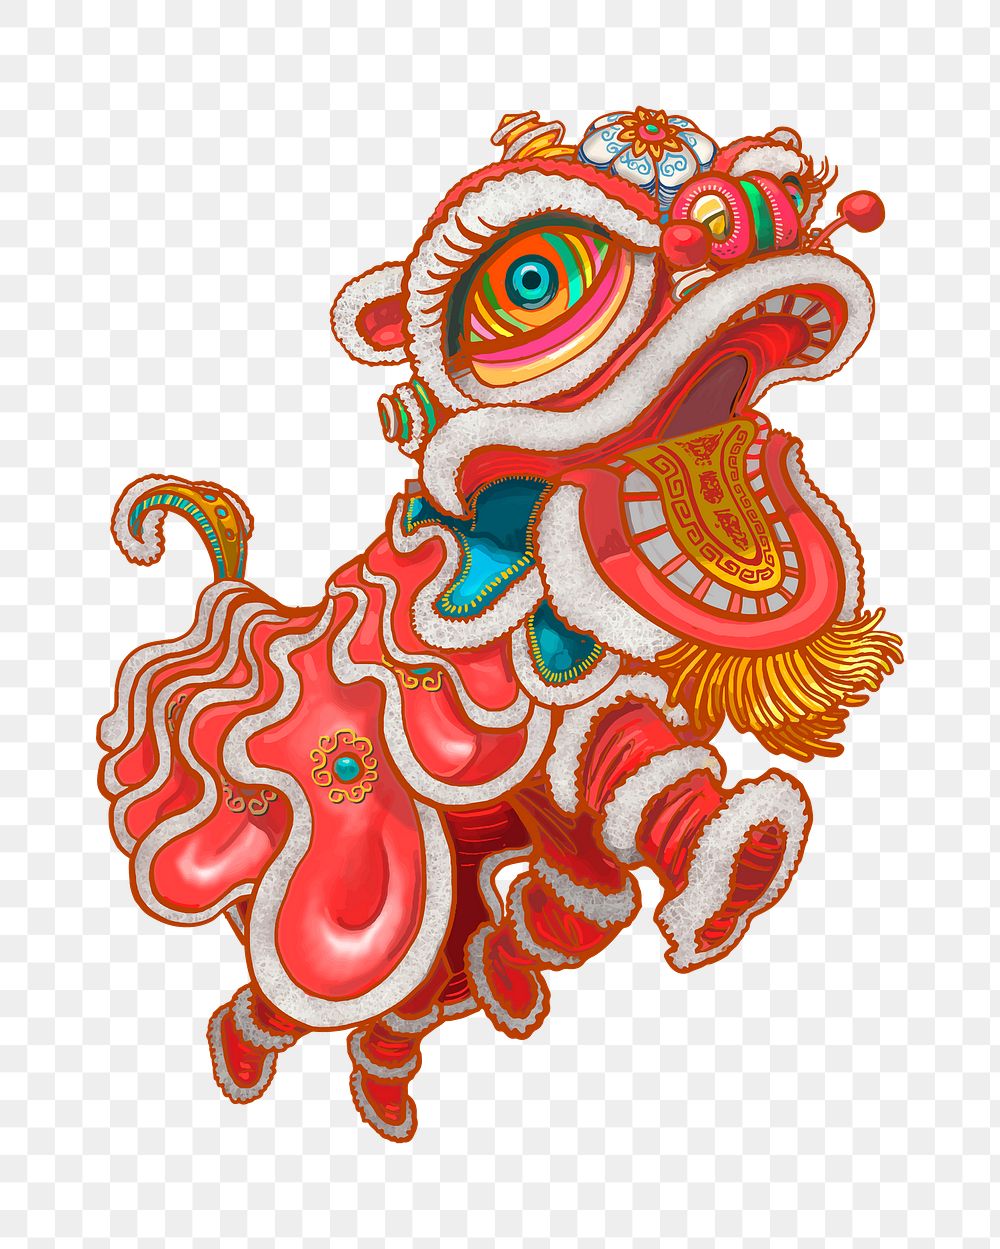 Chinese lion illustration png sticker, transparent background